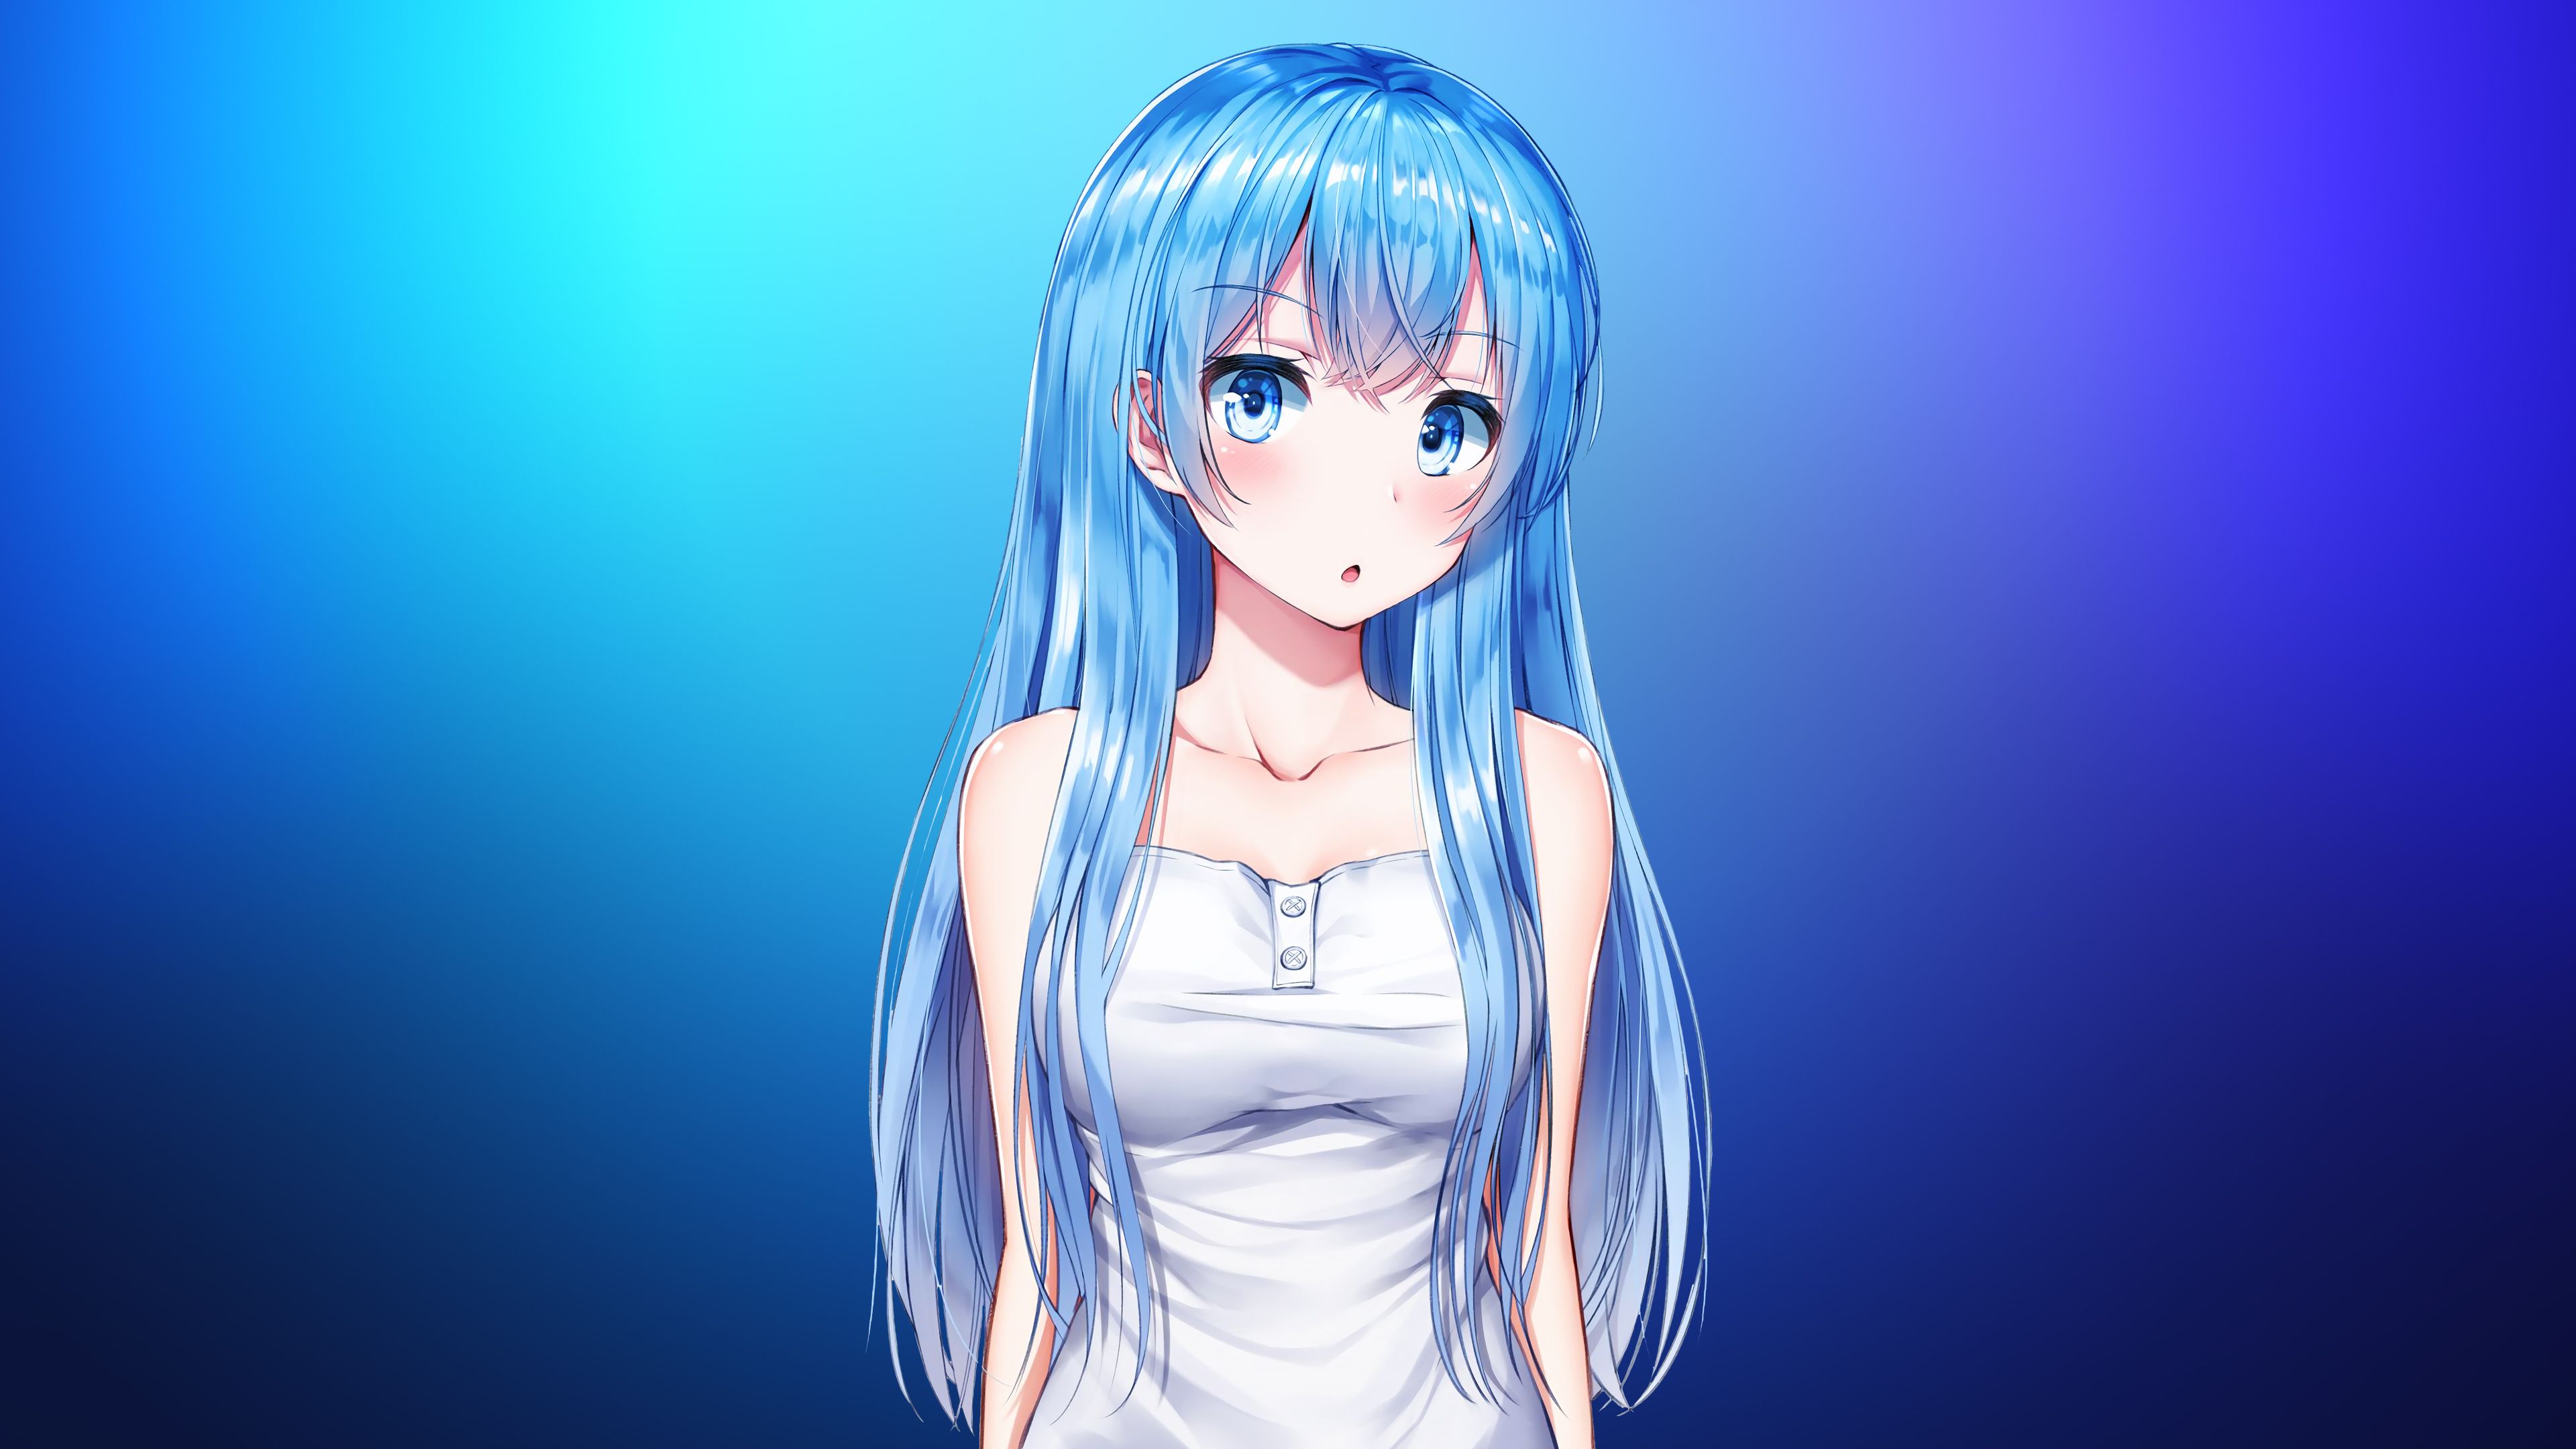 Download 3840x2160 wallpaper blue hair, anime girl, cute, original, 4k, uhd 16: widescreen, 3840x2160 HD image, background, 4863